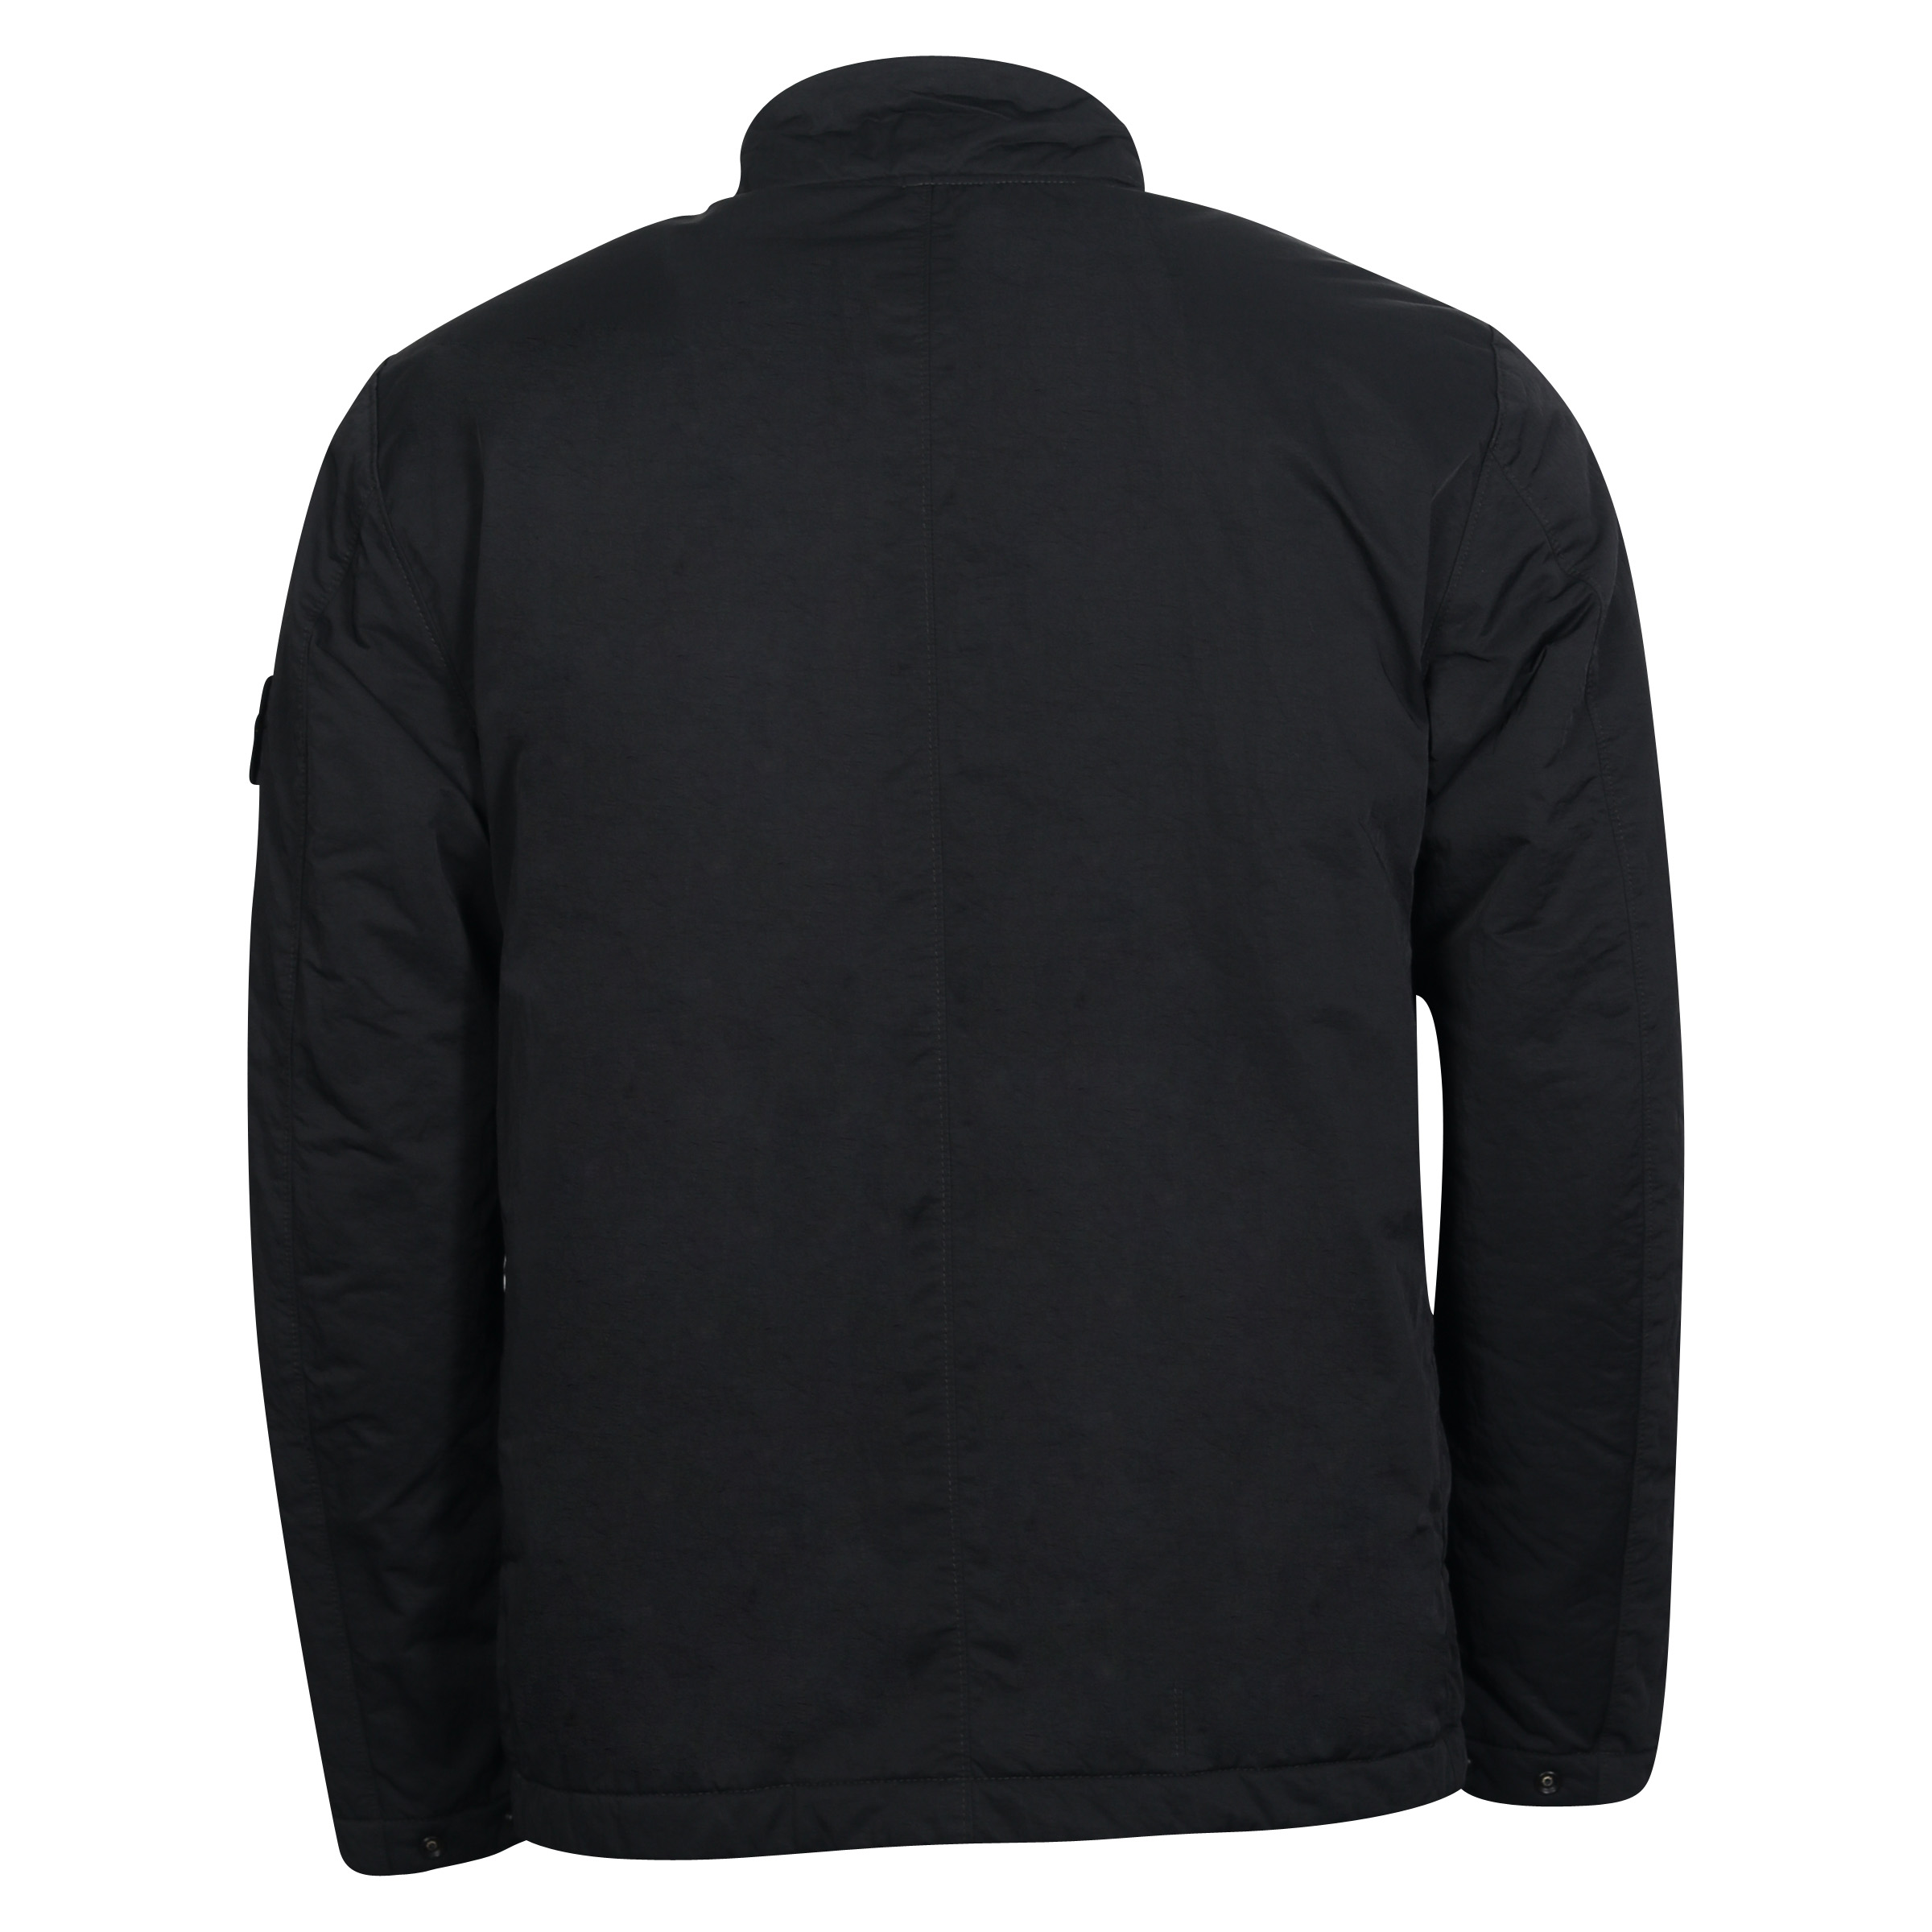 Stone Island Hyper Dense Nylon Twill Jacket in Black with Primaloft